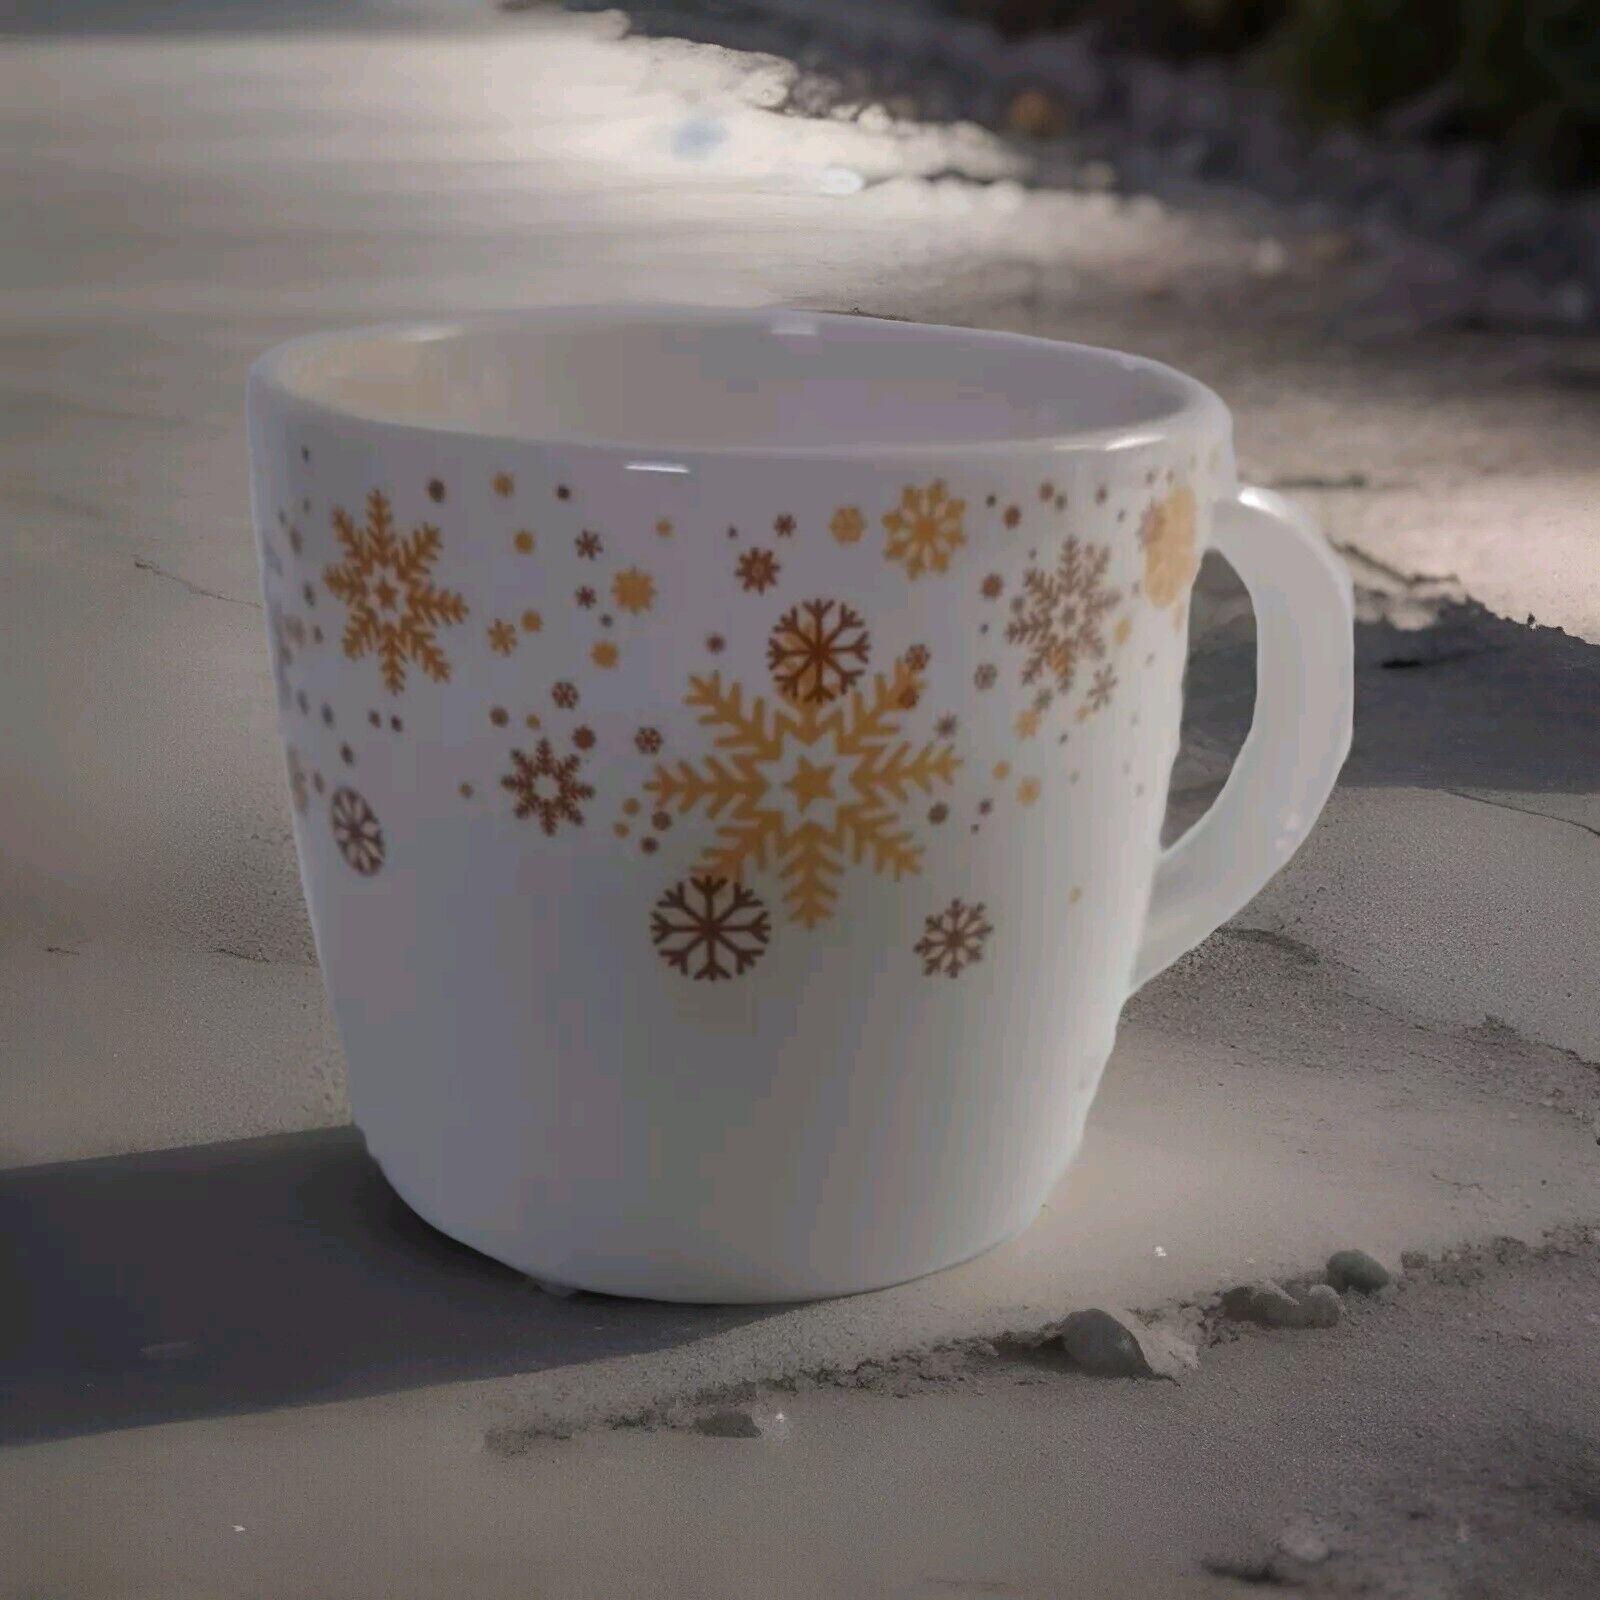 Godiva Coffee Mug Cup Chocolate White Gold Snowflakes Holiday Christmas Collect